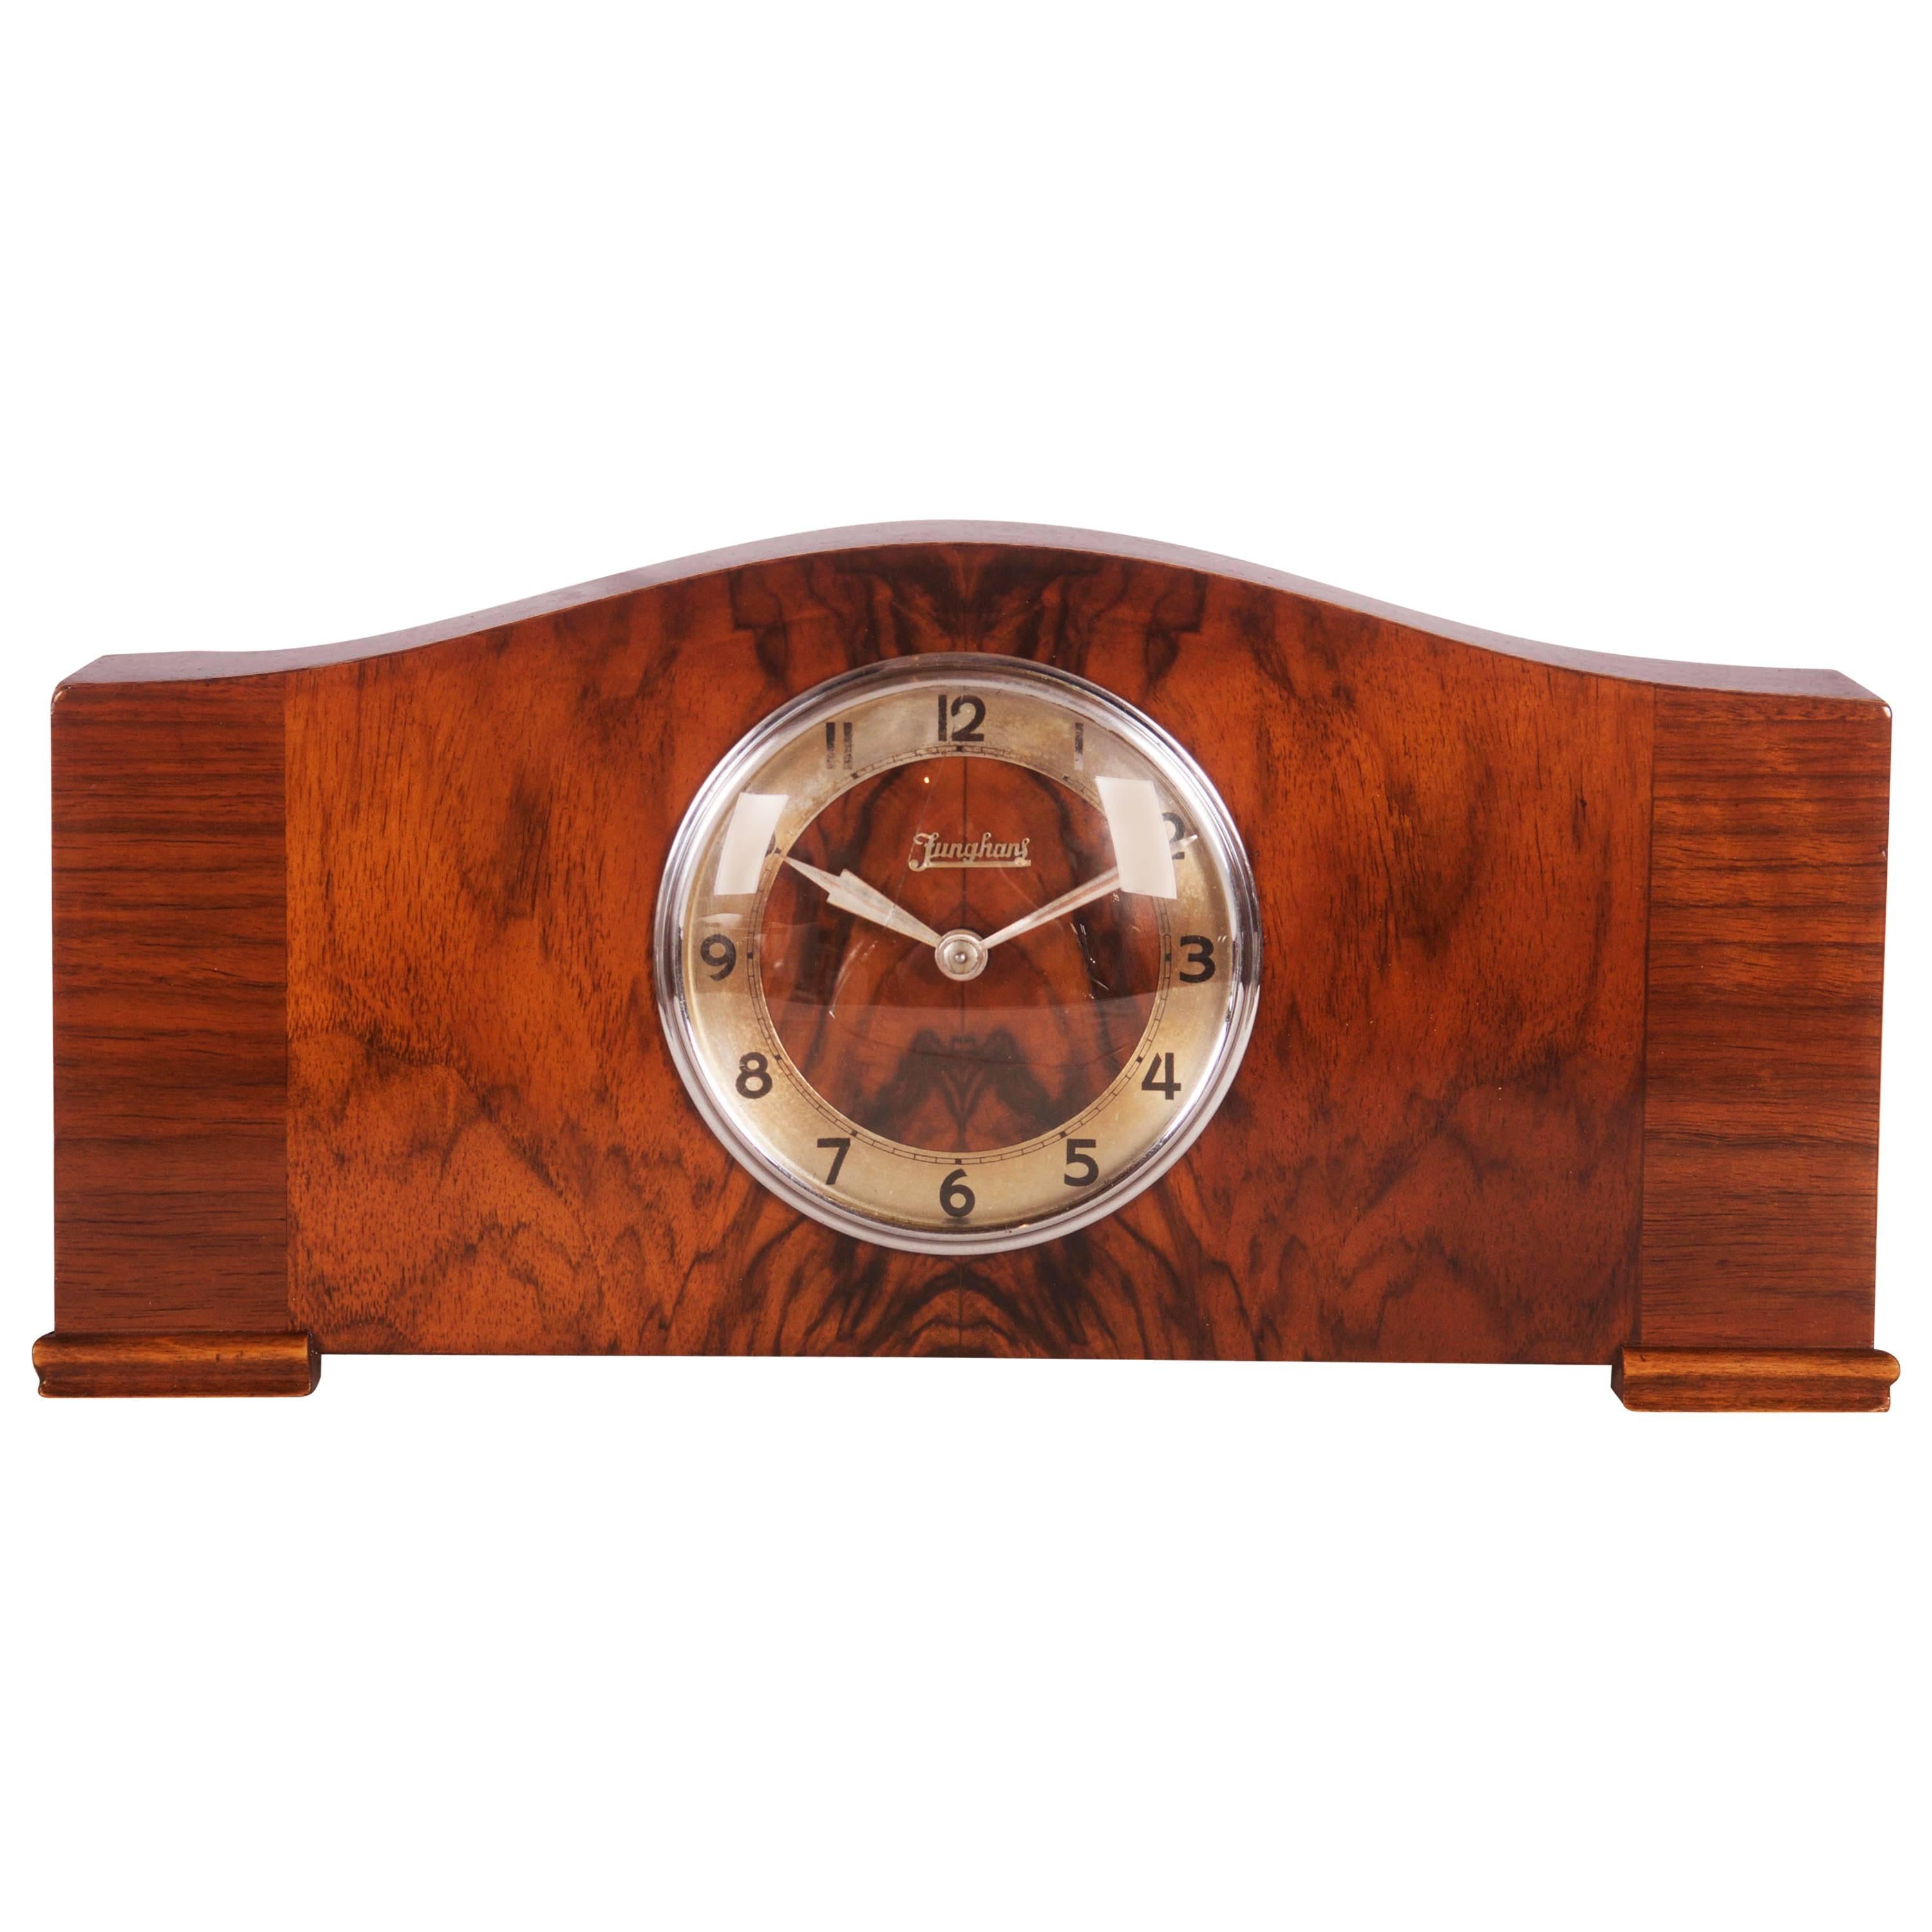 Art Deco Mantel Alarm Clock by Junghans